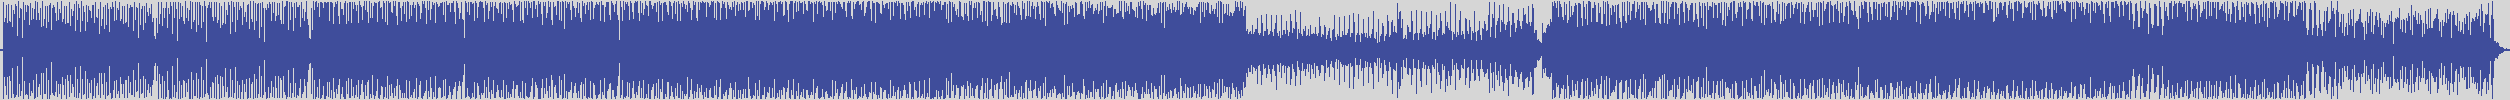 nf_boyz_records [NFY054] Zidan Majer - Push On [Original Mix] audio wave form